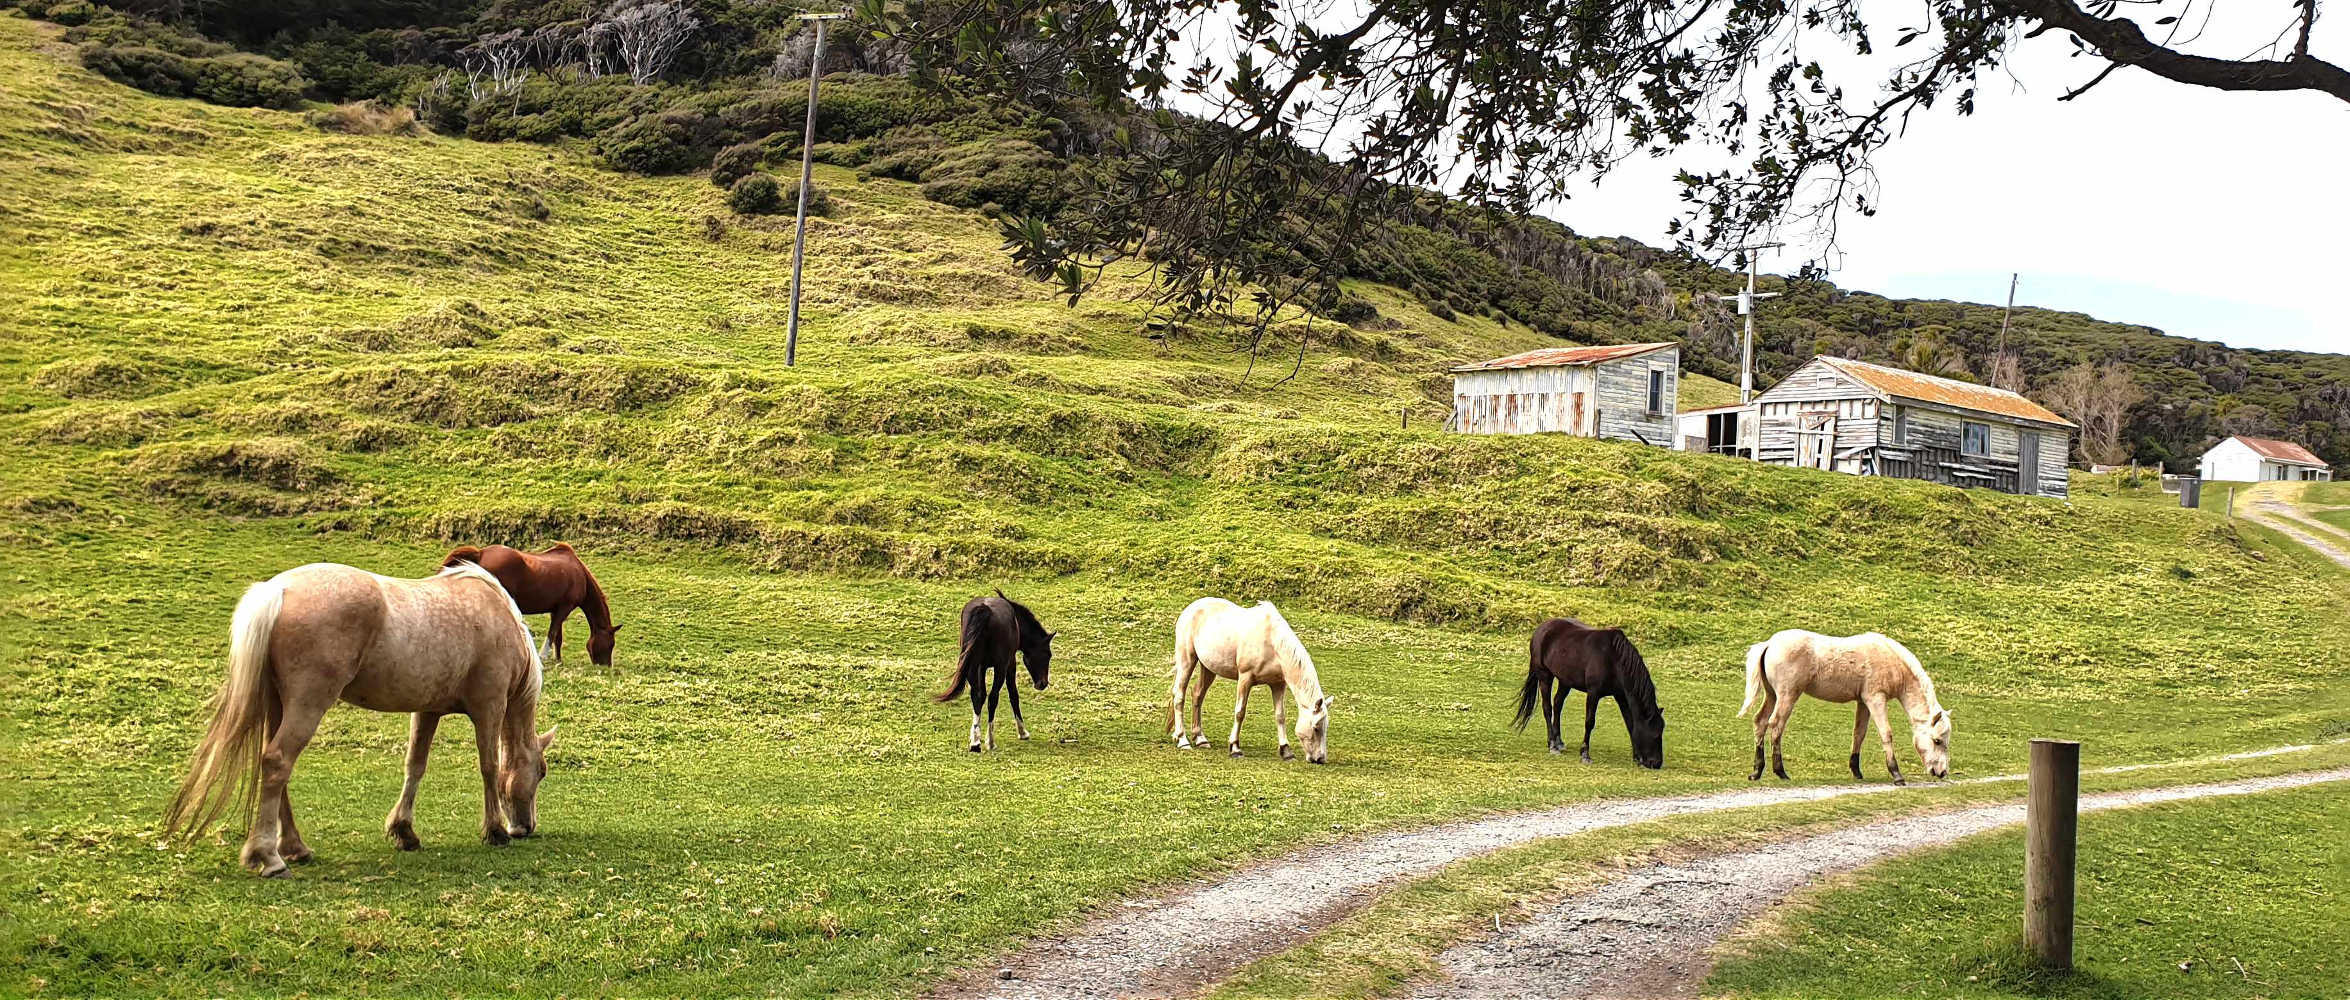 East Cape Lighthouse walk entrance with wild horses deciding where to graze next, New Zealand